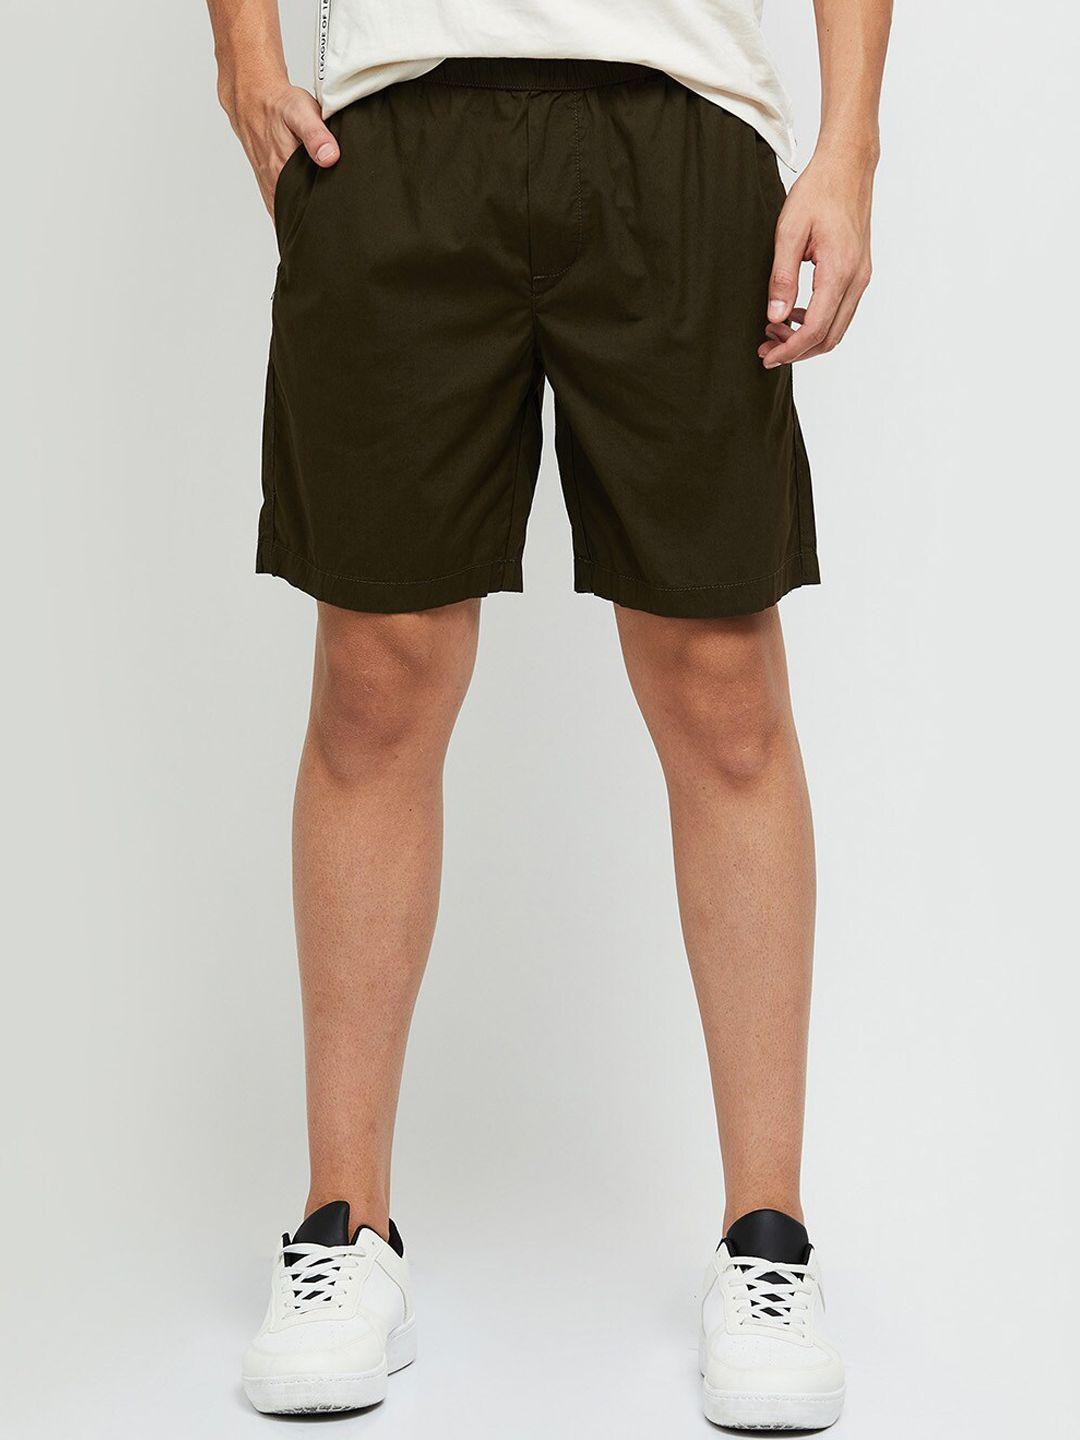 max men cotton sports shorts